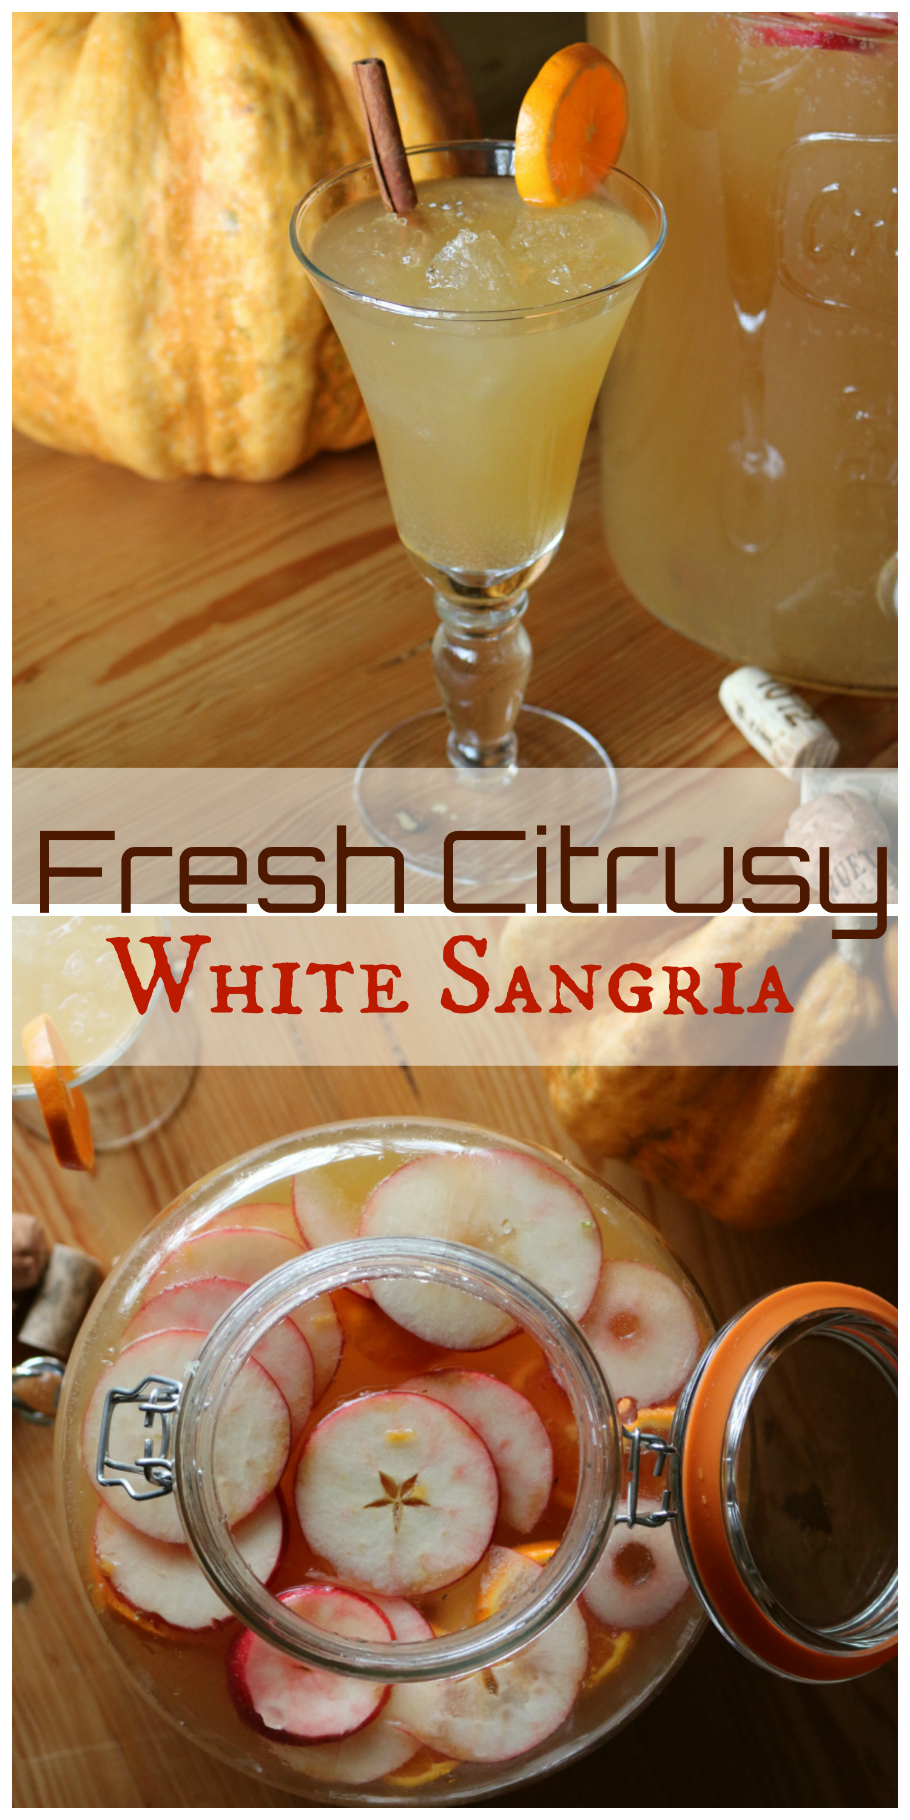 A Fresh Citrusy White Sangria Recipe CeceliasGoodStuff.com Good Food for Good People